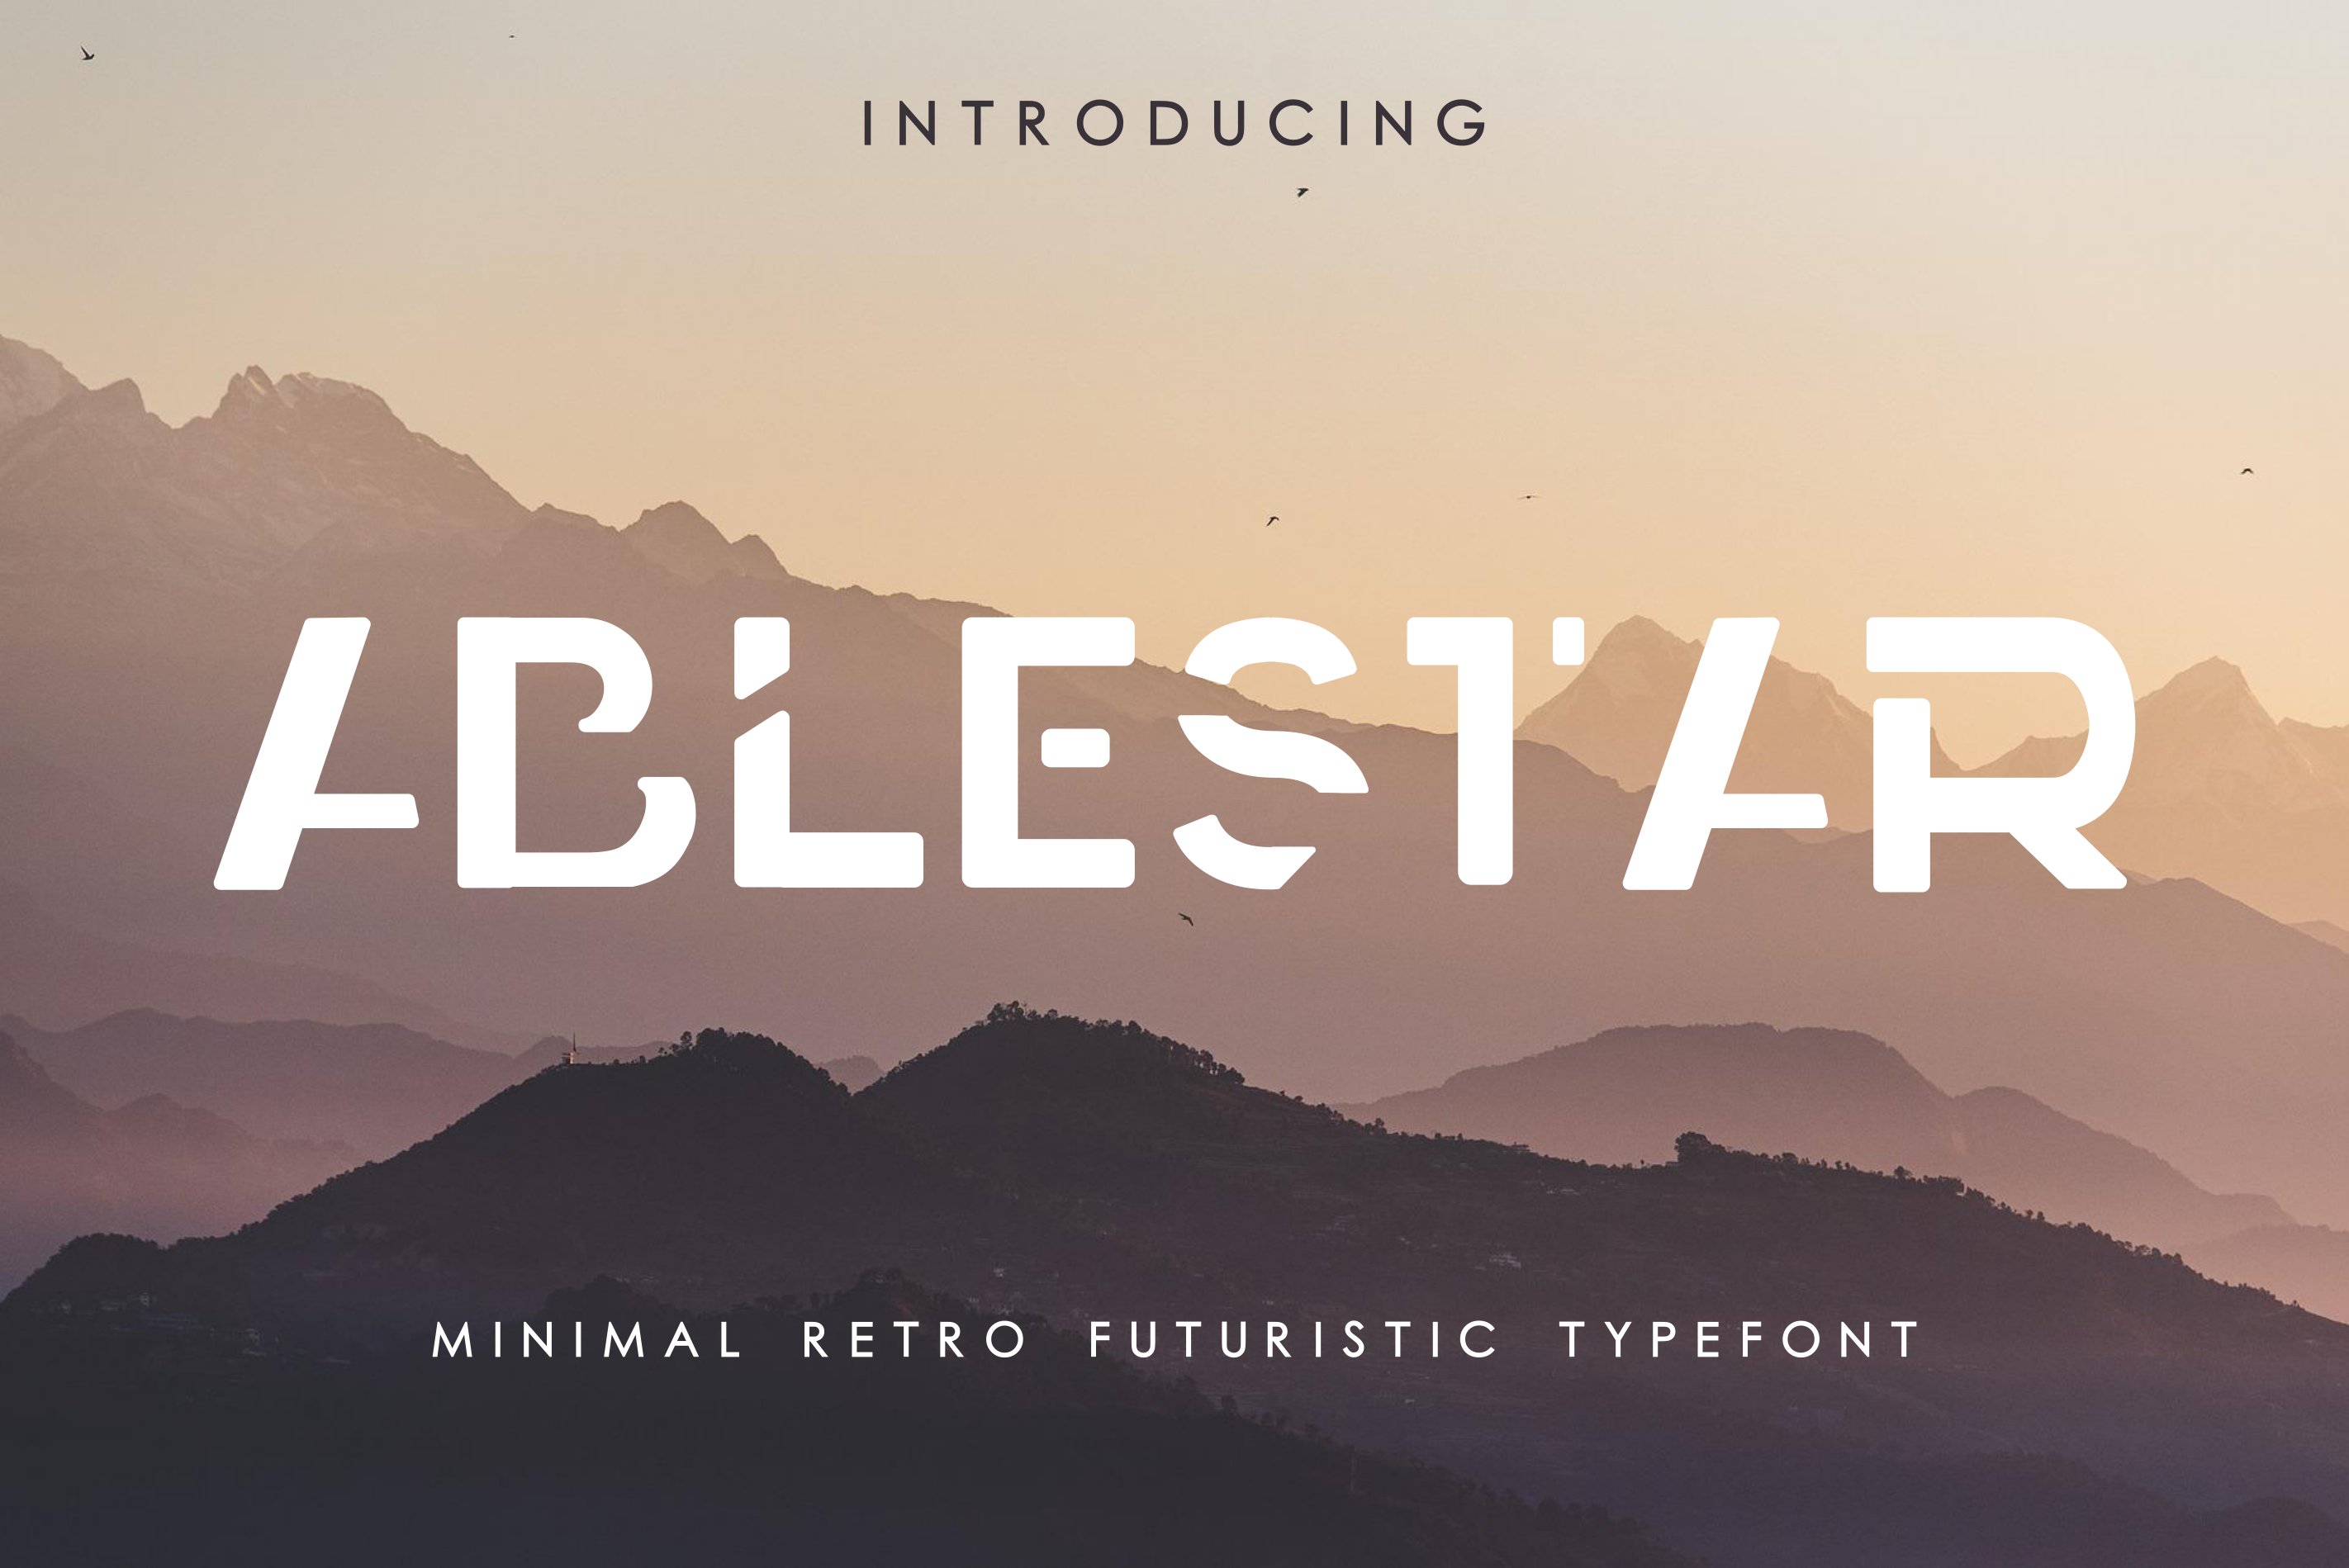 Ablestar - Retro Futuristic Typefont cover image.